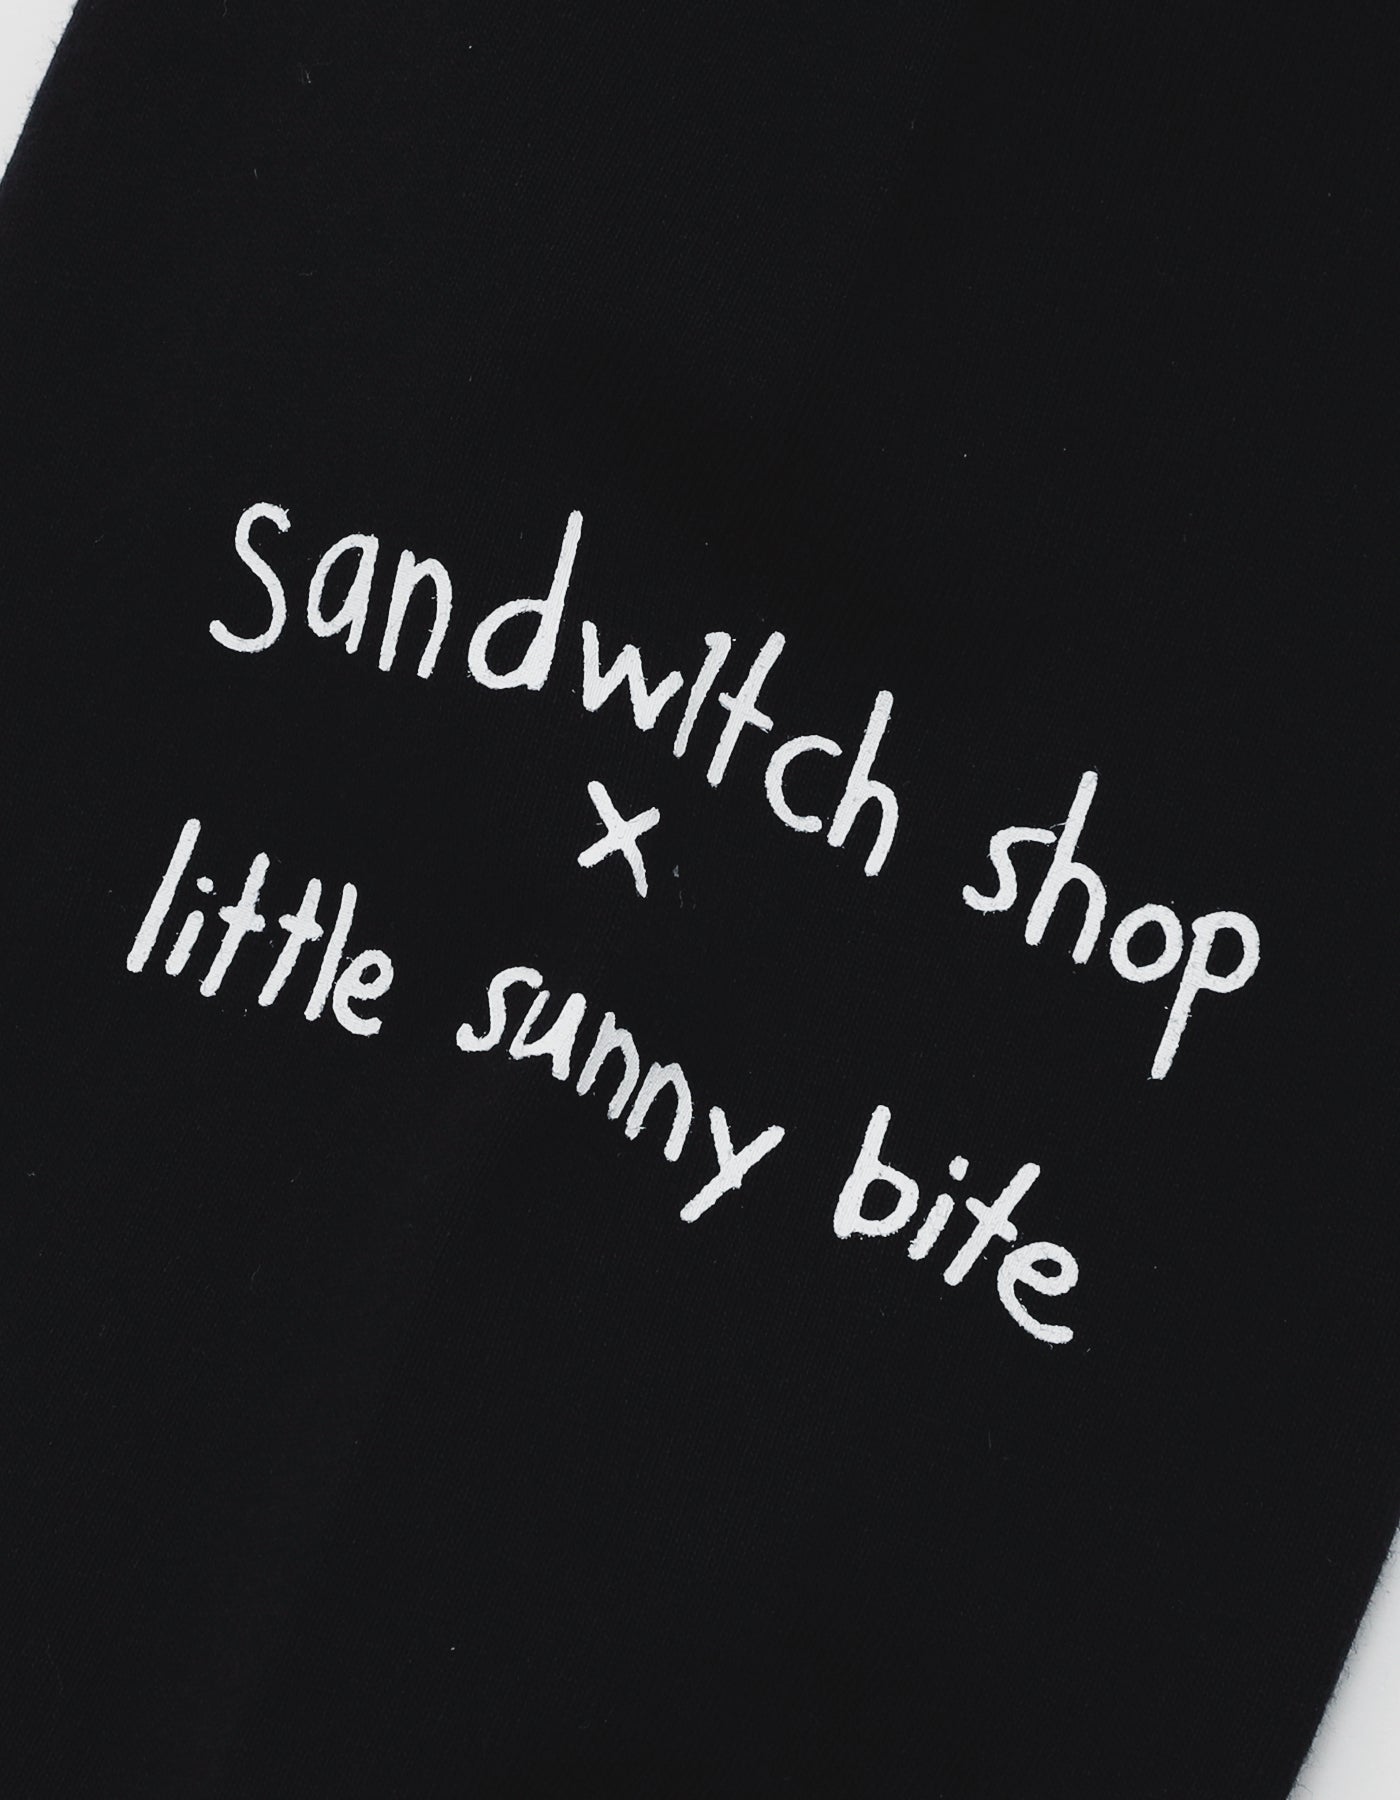 sandw1tch shop x little sunny bite long tee / BLACK